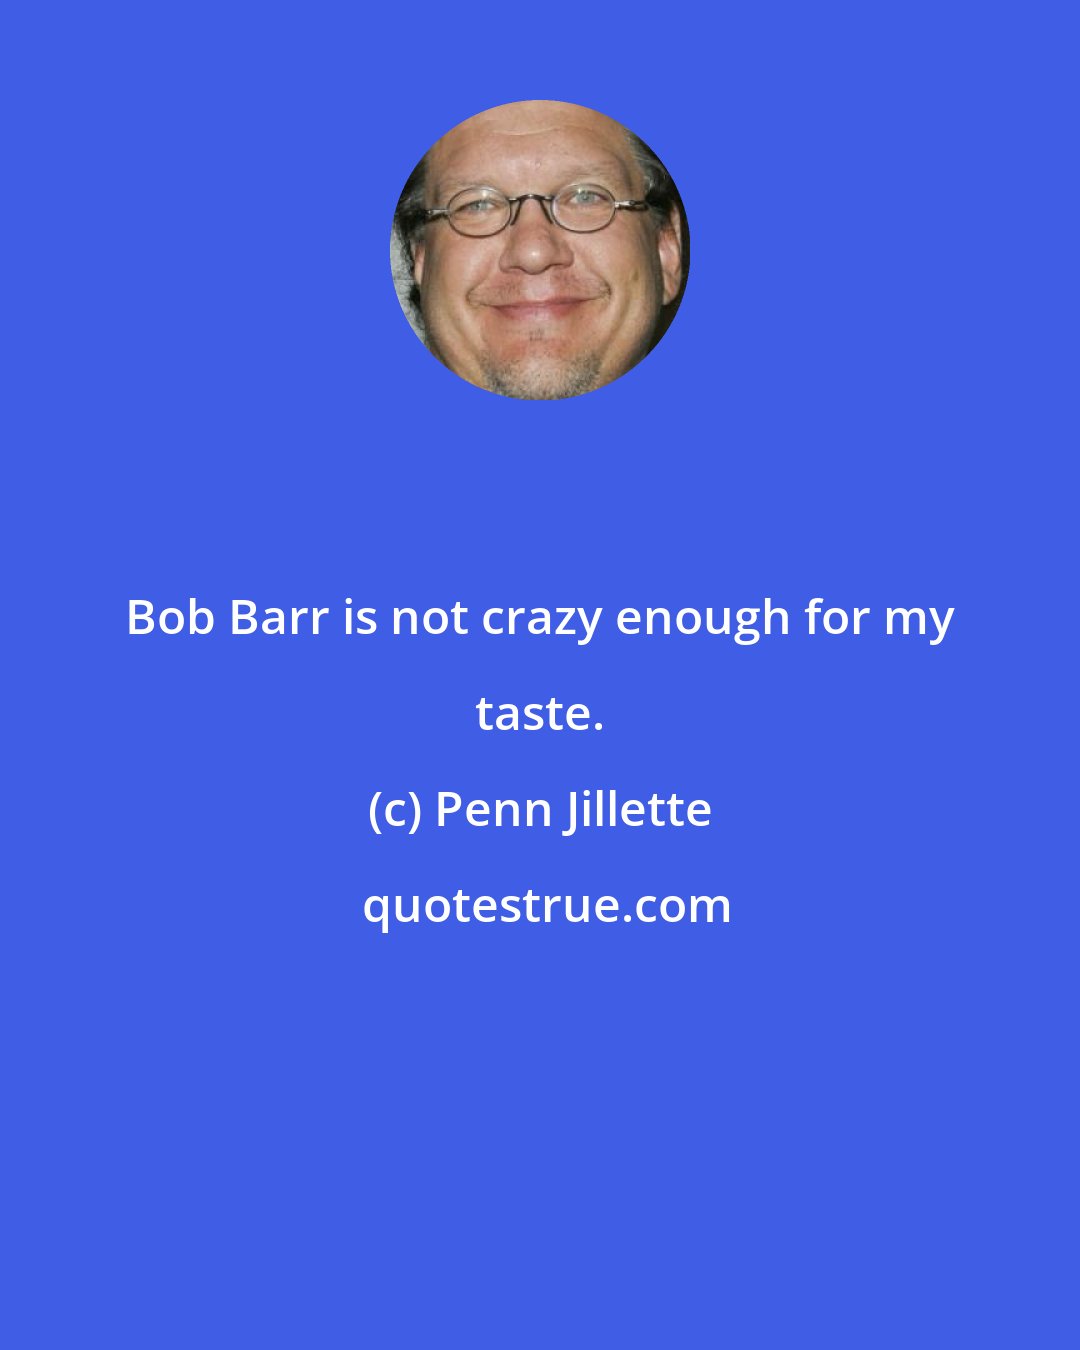 Penn Jillette: Bob Barr is not crazy enough for my taste.